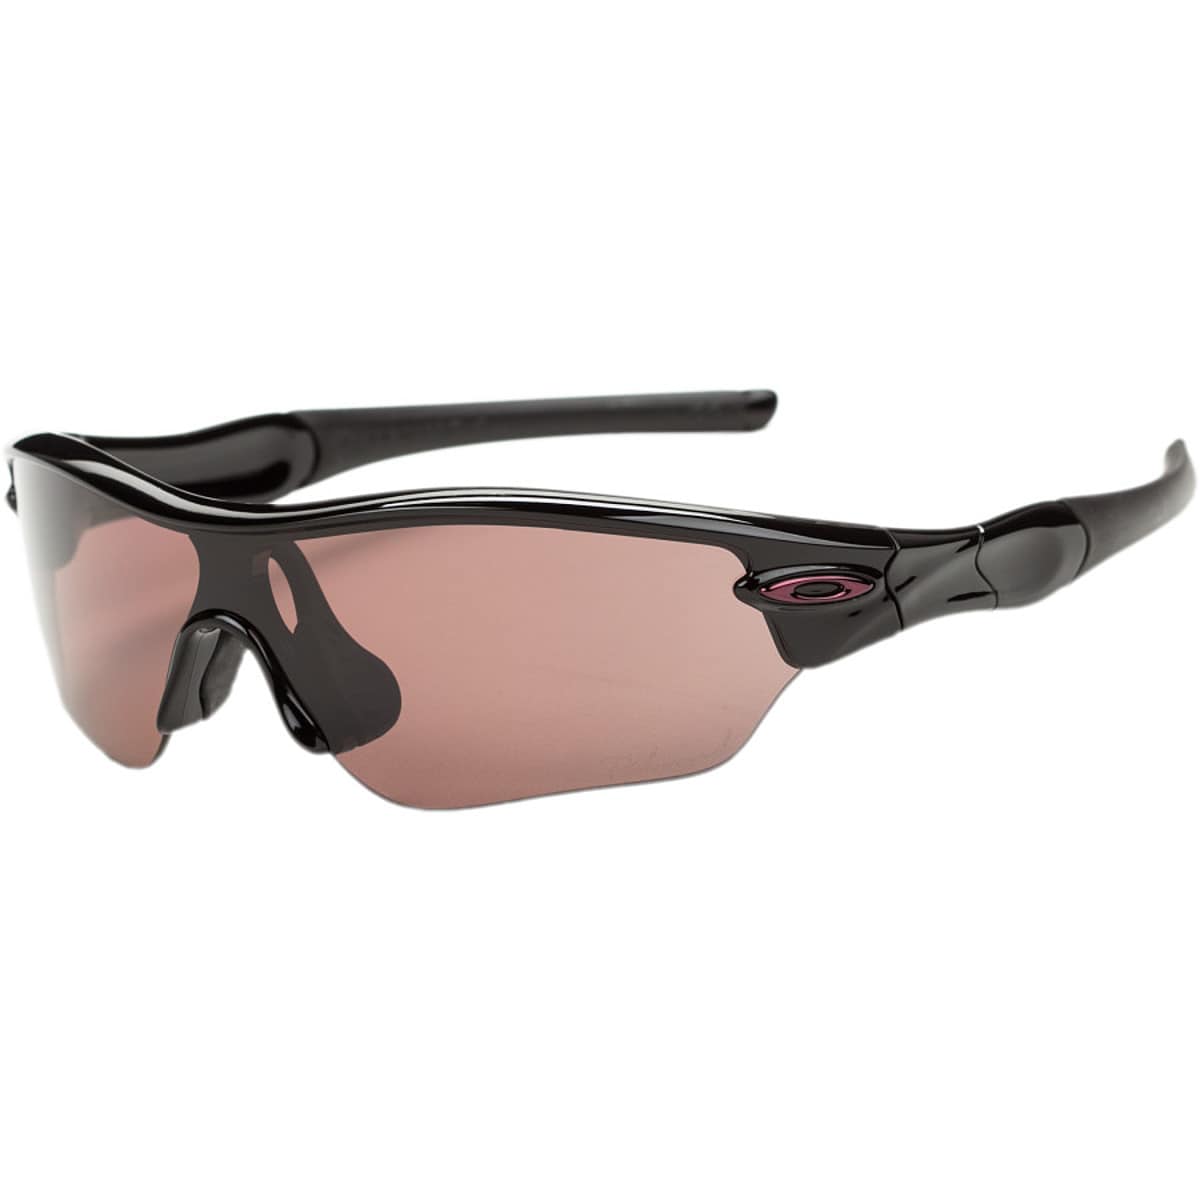 Oakley Radar Edge Polarized Women's Sunglasses - Accessories